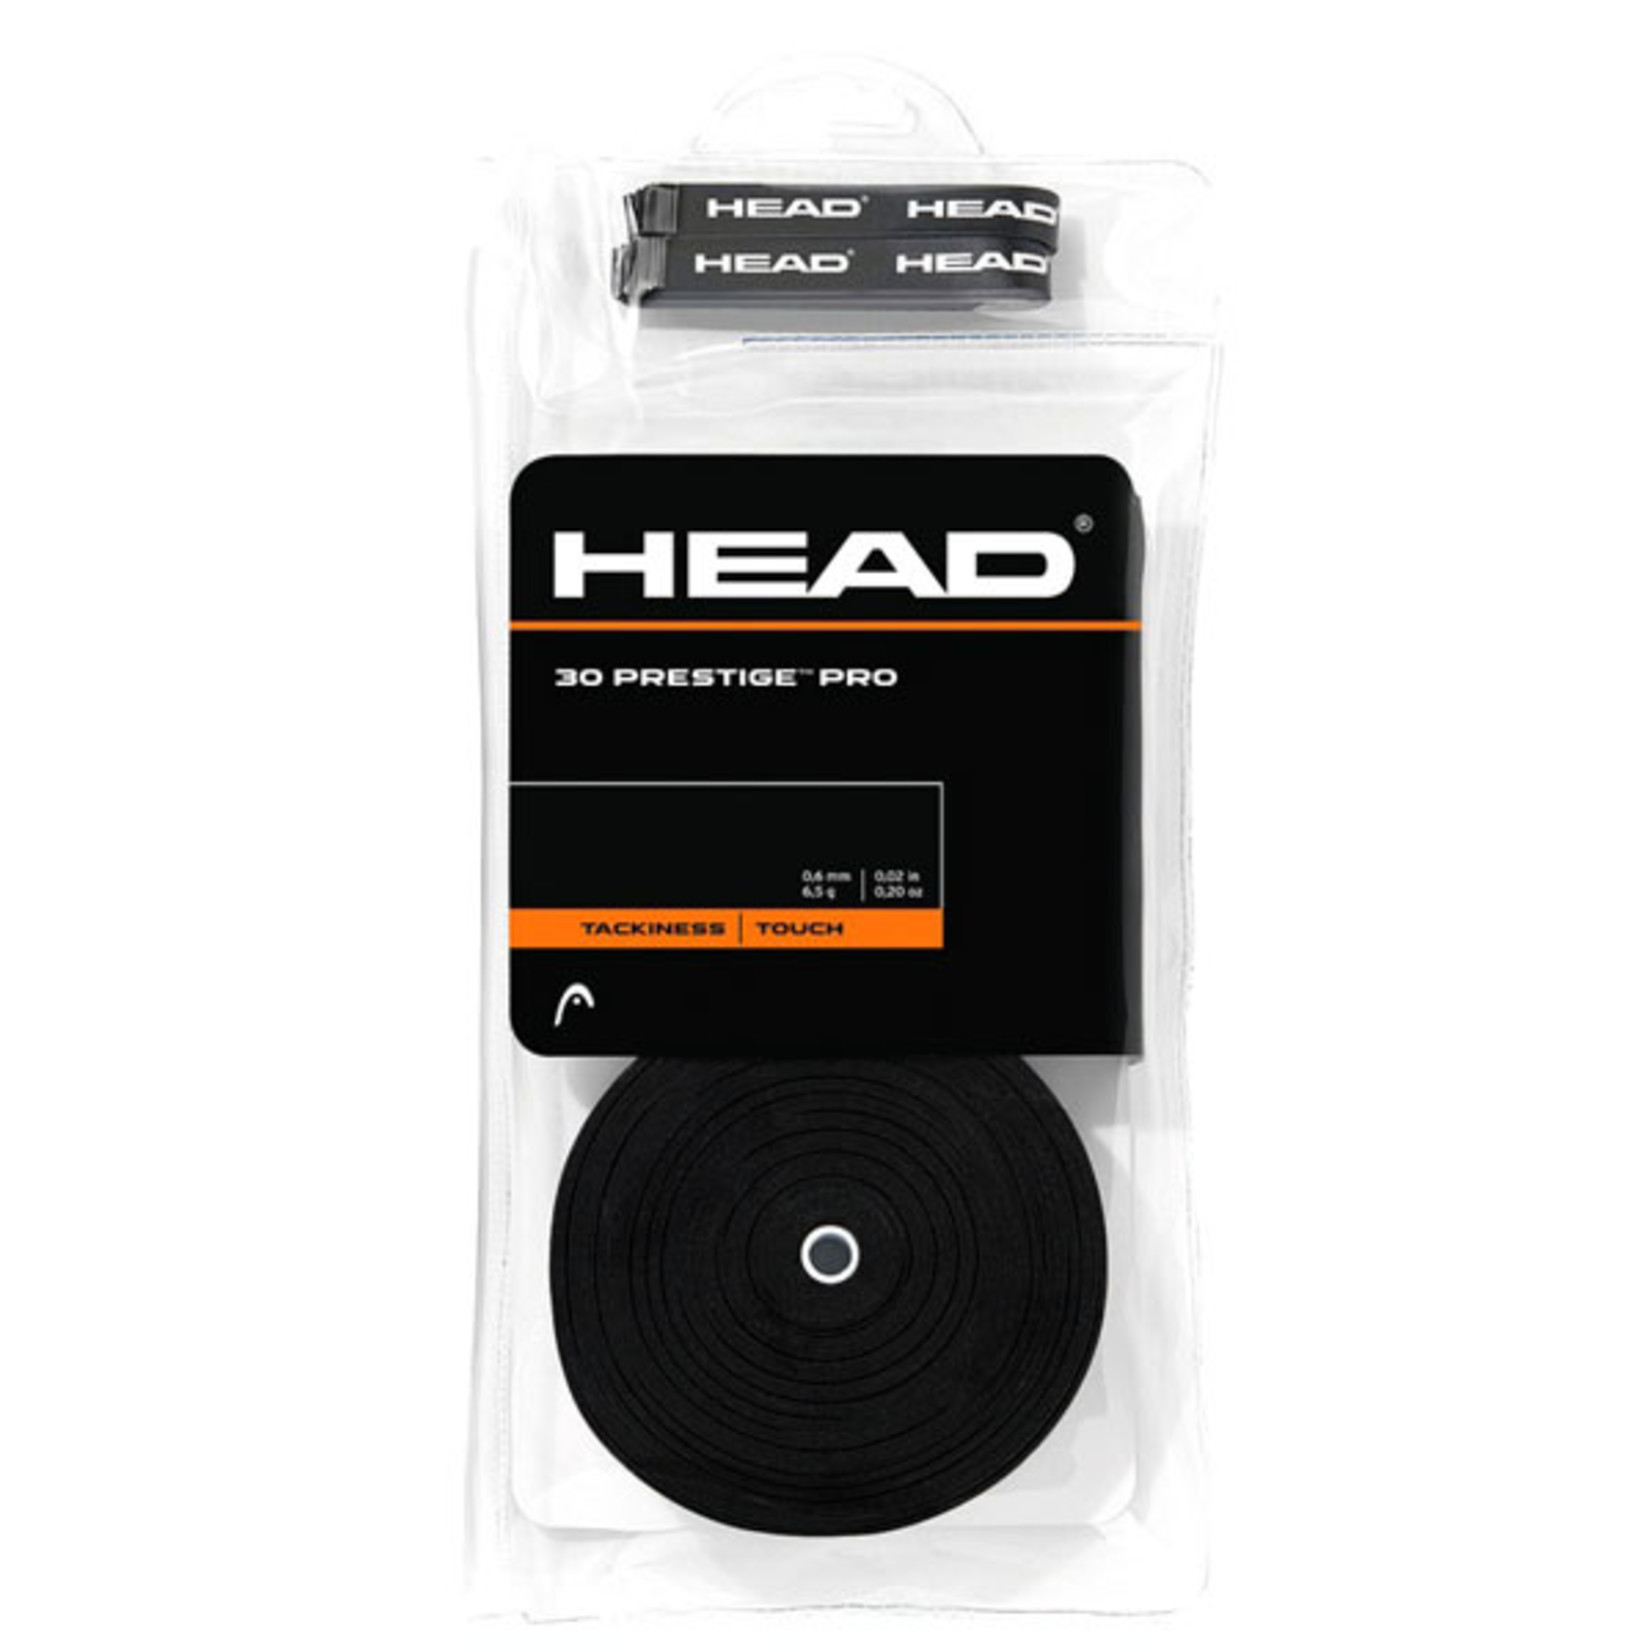 Head Head Prestige Pro Overgrips (30 pack)